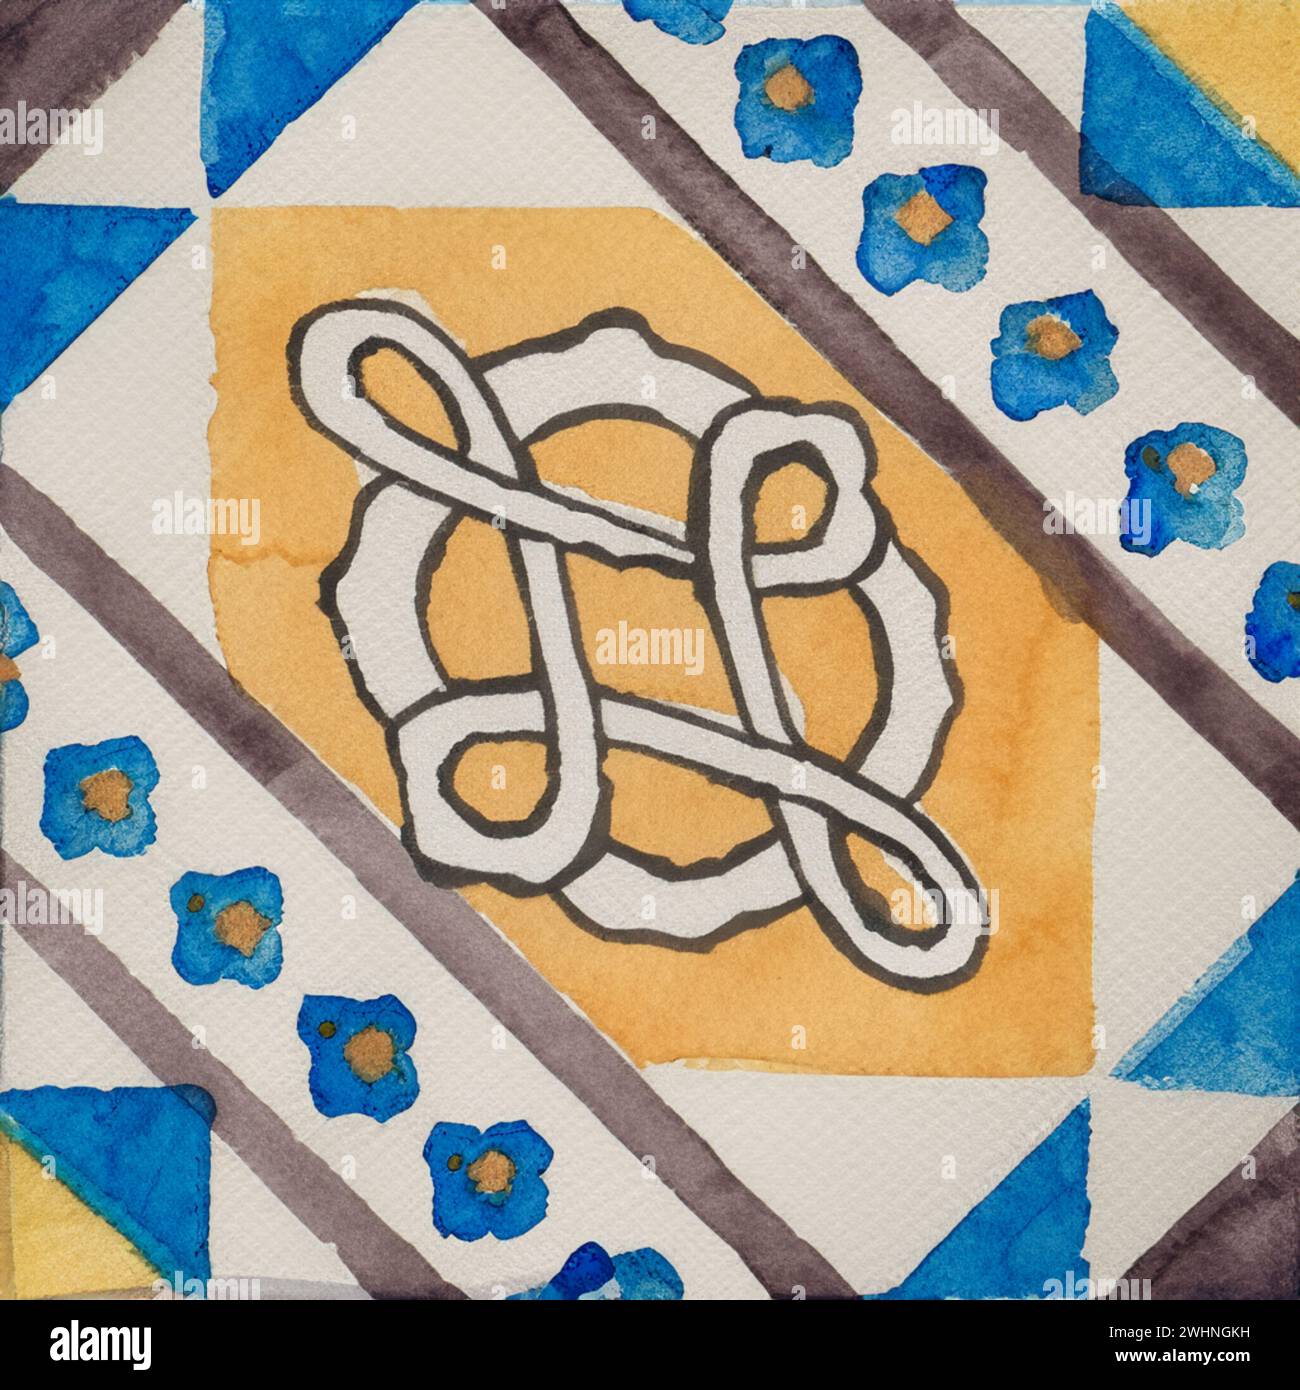 Watercolor illustration of portuguese ceramic tiles pattern Stock Photo